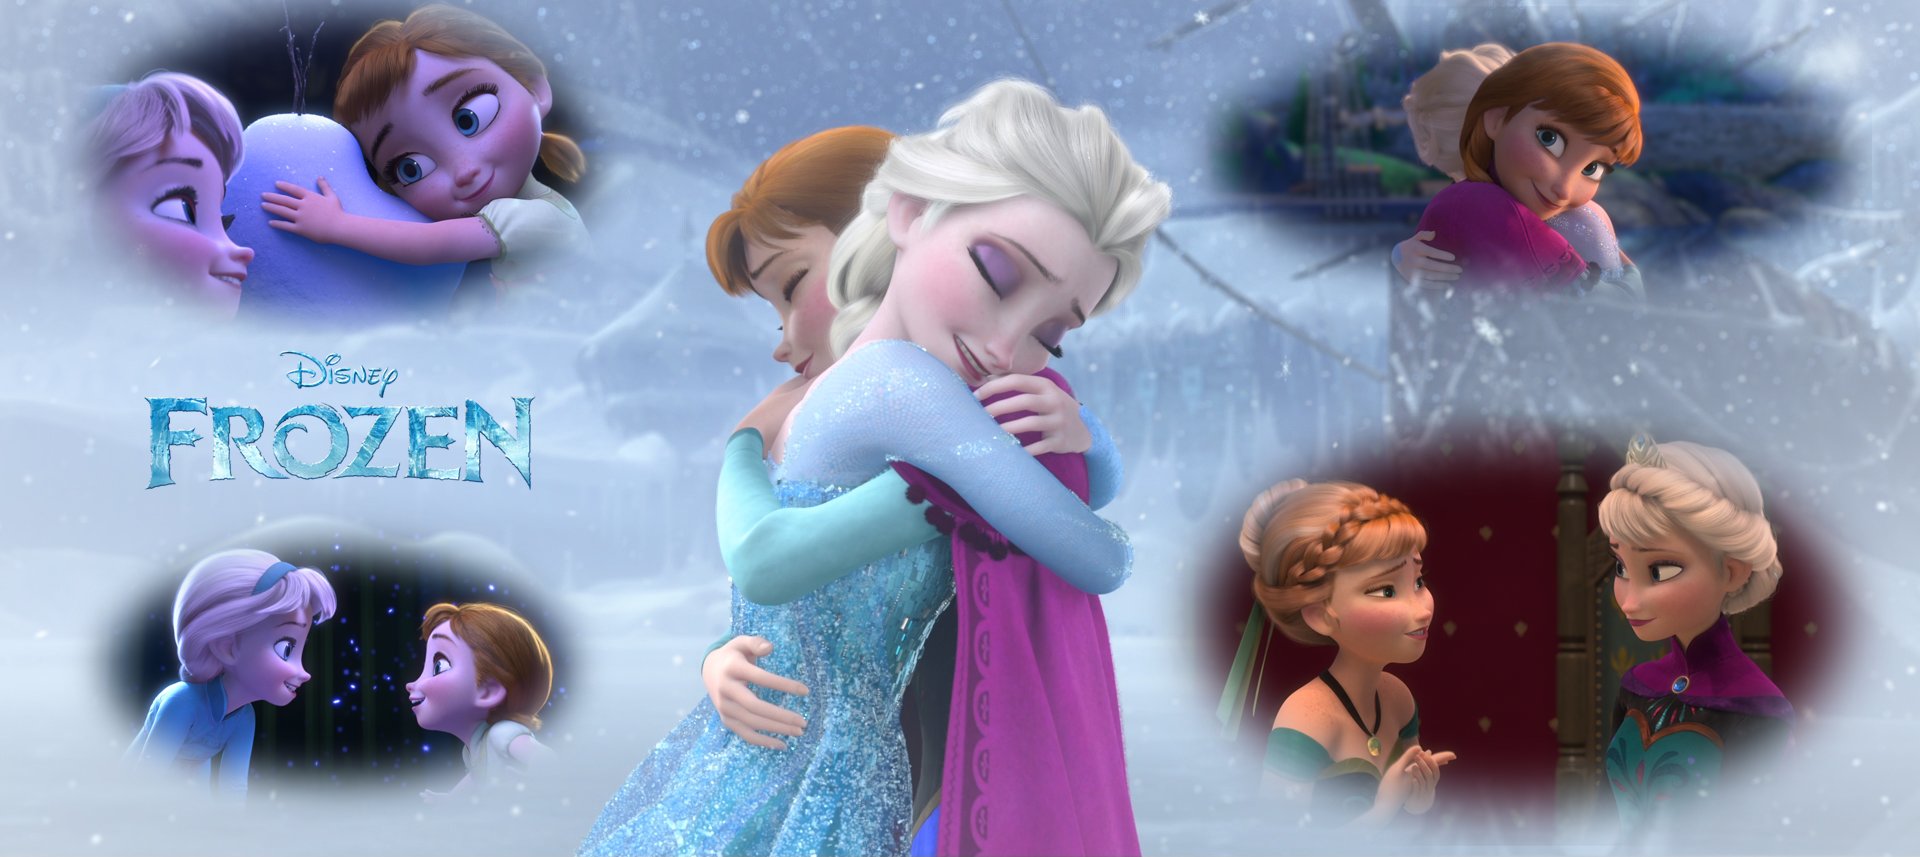 Free download Elsa and Anna wallpaper from rFrozen iimgurcom